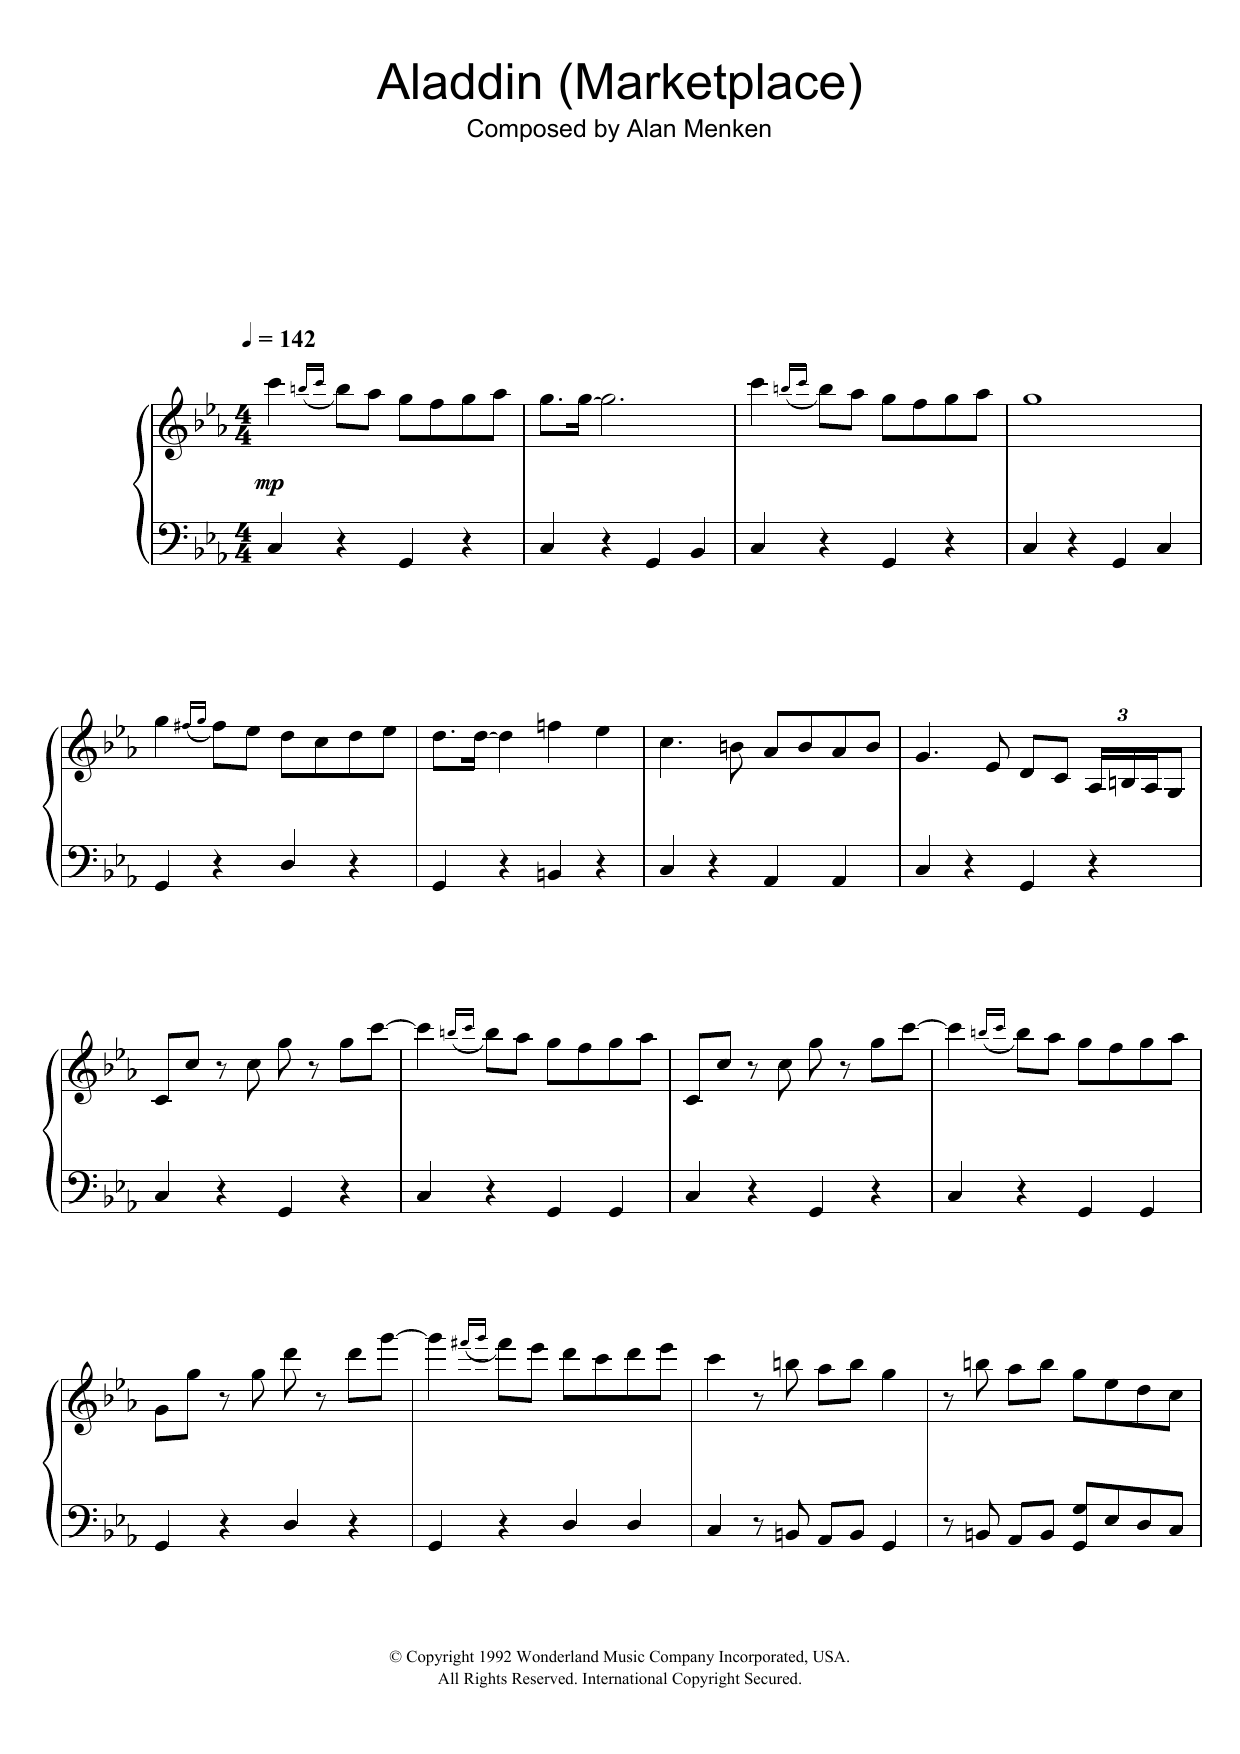 Alan Menken Aladdin (Marketplace) Sheet Music Notes & Chords for Piano - Download or Print PDF